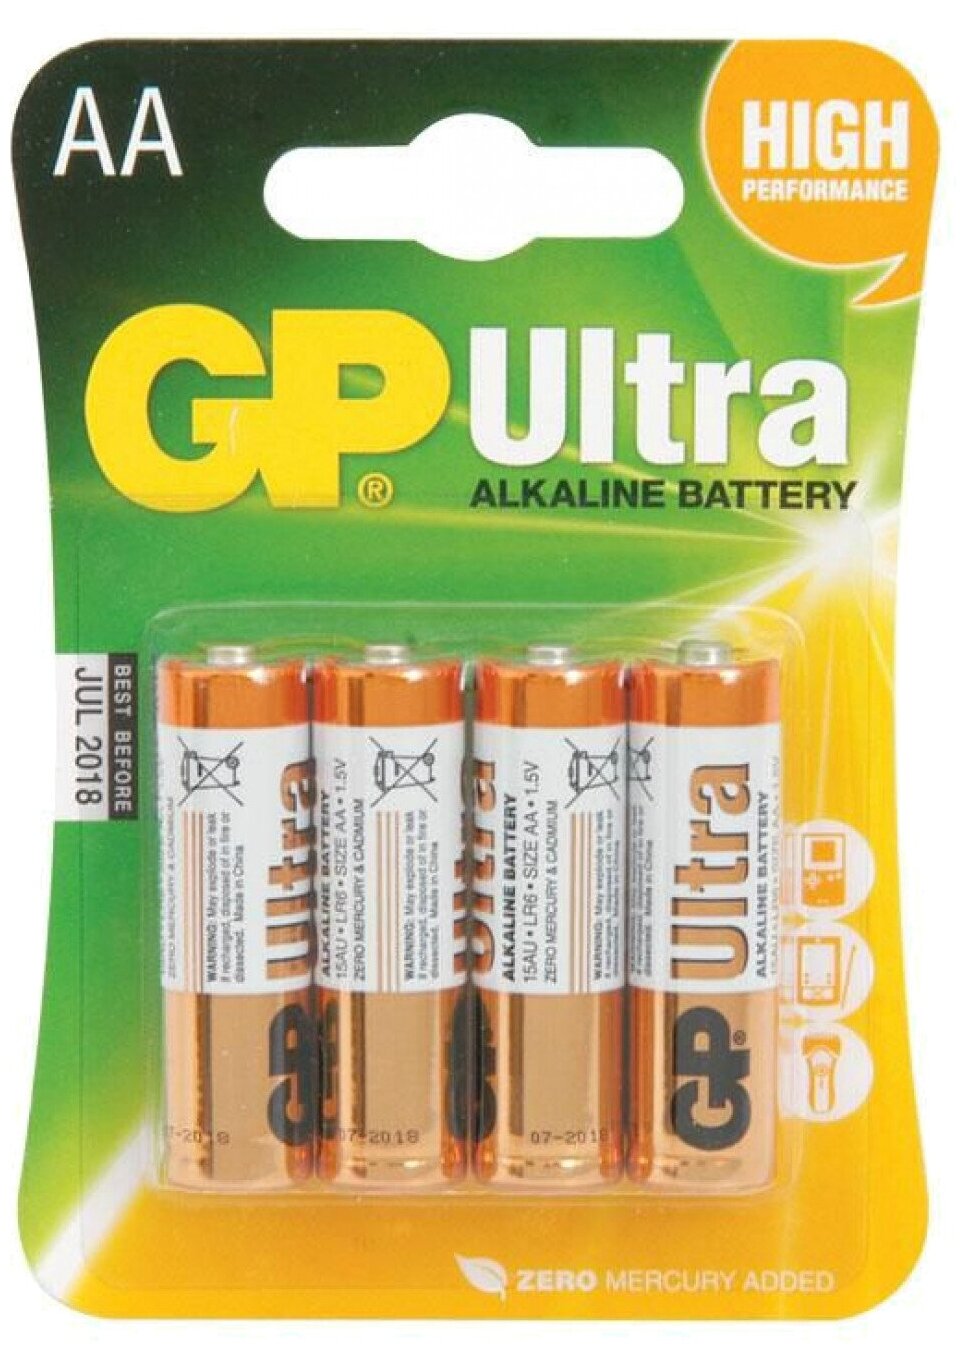 Батарейка GP Ultra Alkaline AA, в упаковке: 4 шт. —  в интернет .